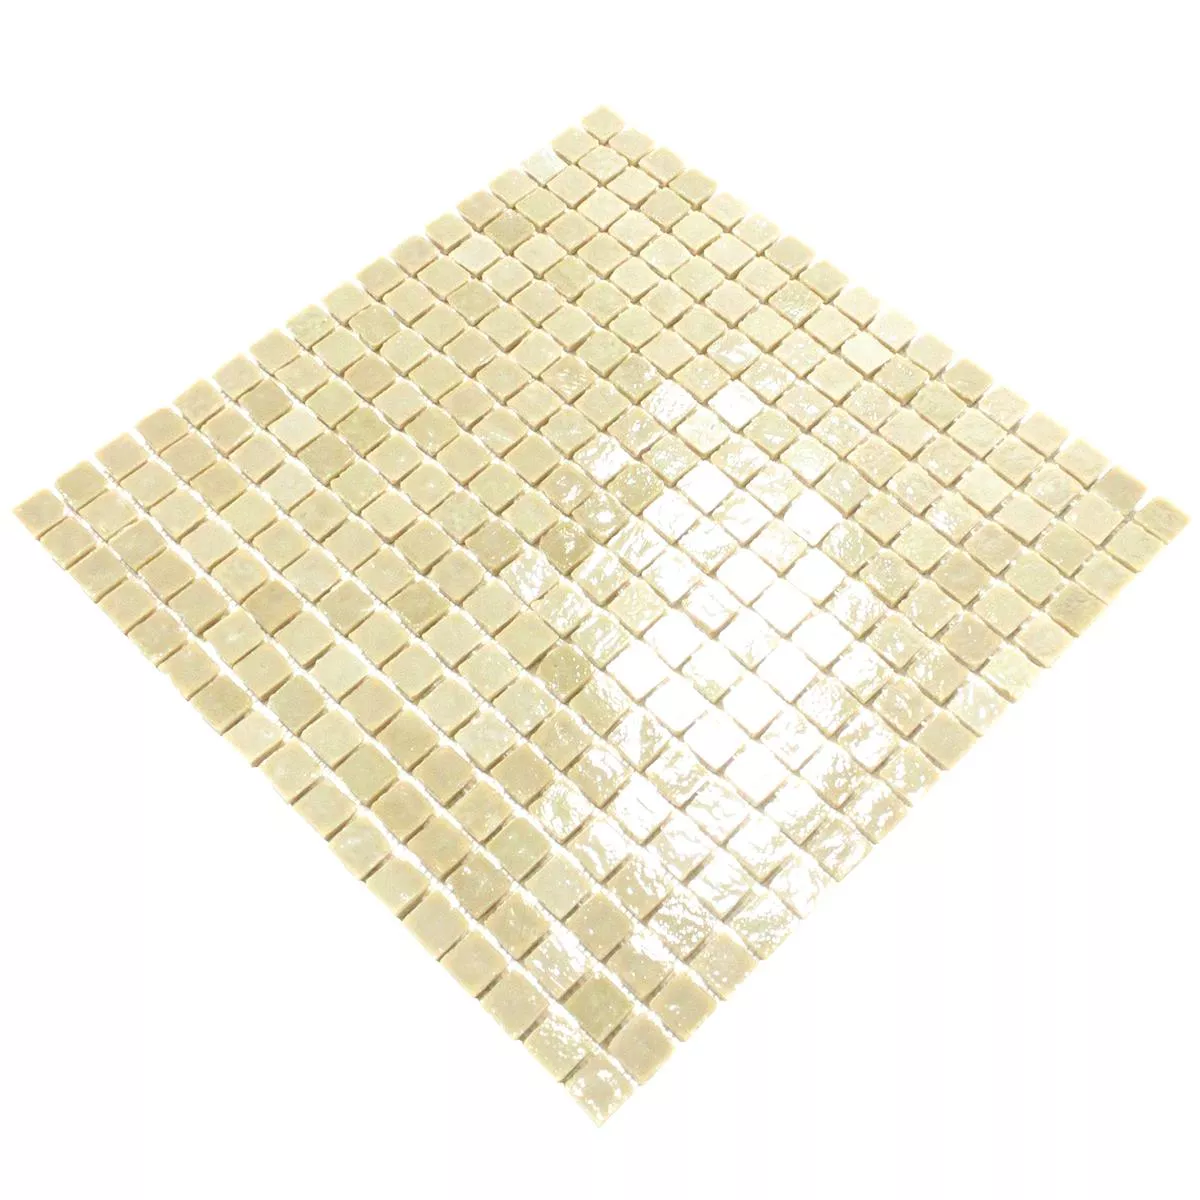 Glass Mosaic Tiles Havana Sand